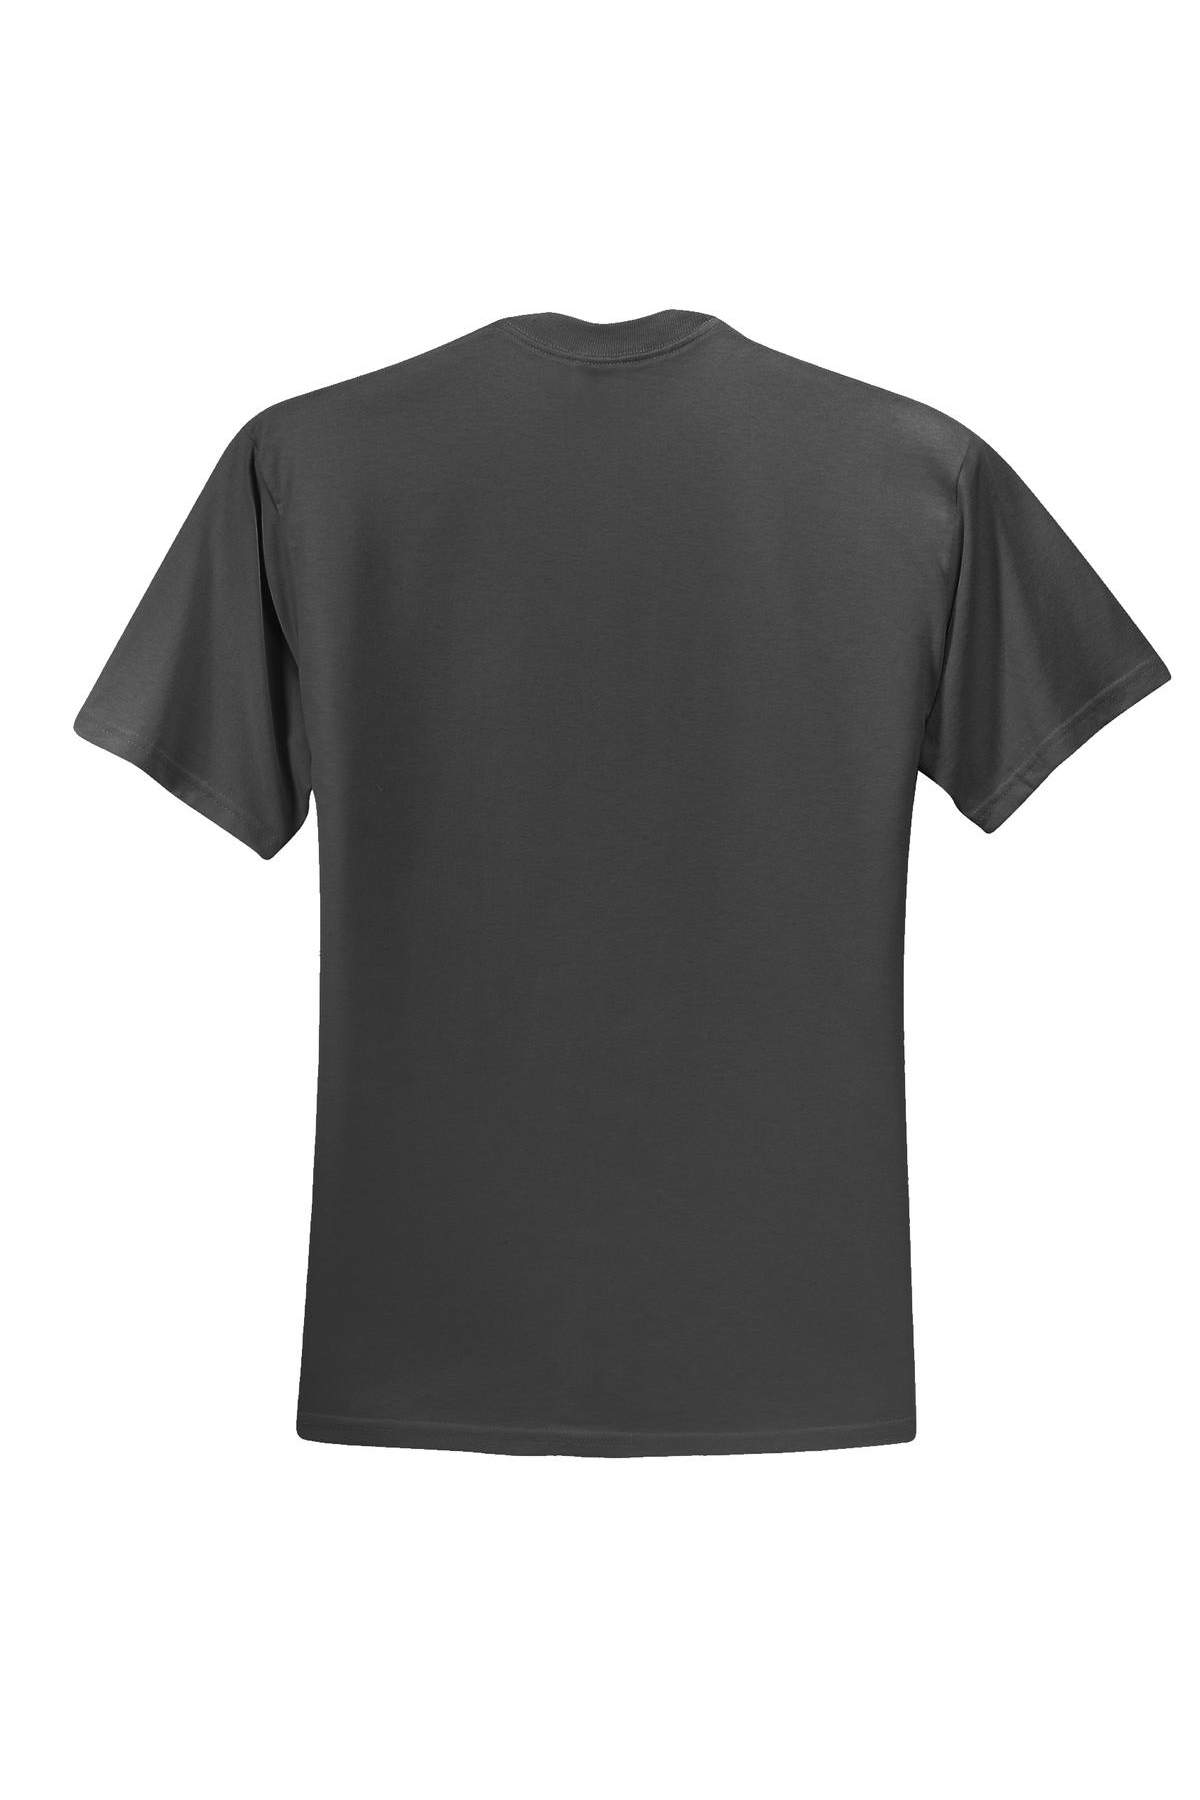 JERZEES - Dri-Power 50/50 Cotton/Poly T-Shirt | Product | SanMar